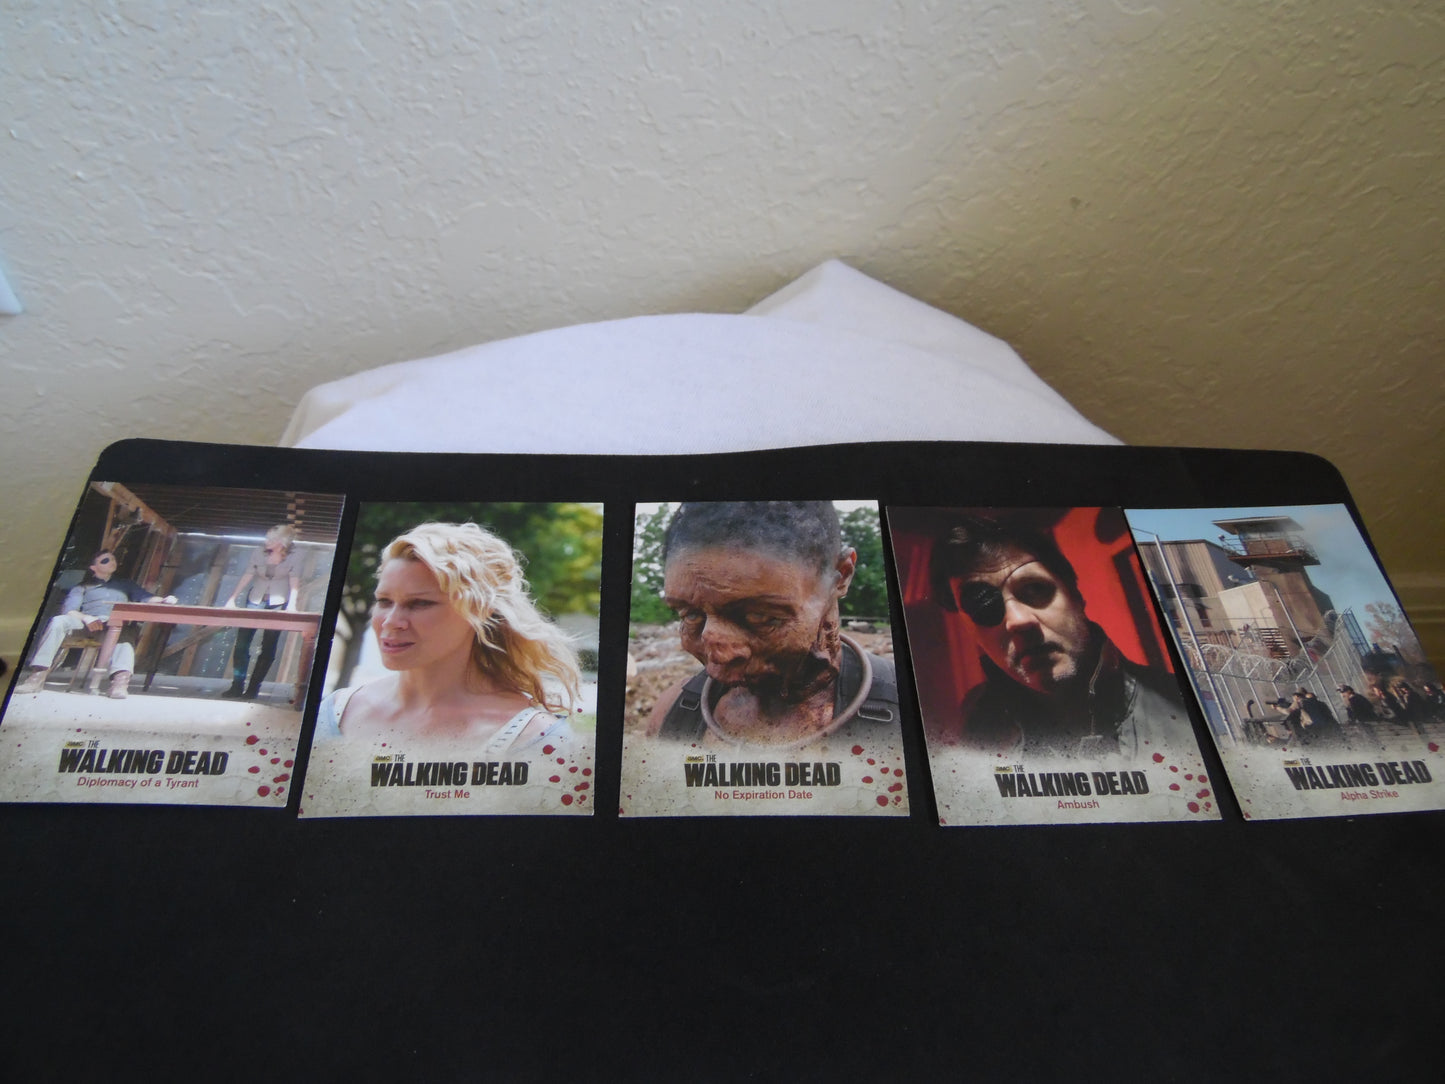 Walking Dead Trading Cards Base Set Season 3 Part 2 Lot Five of Cards.